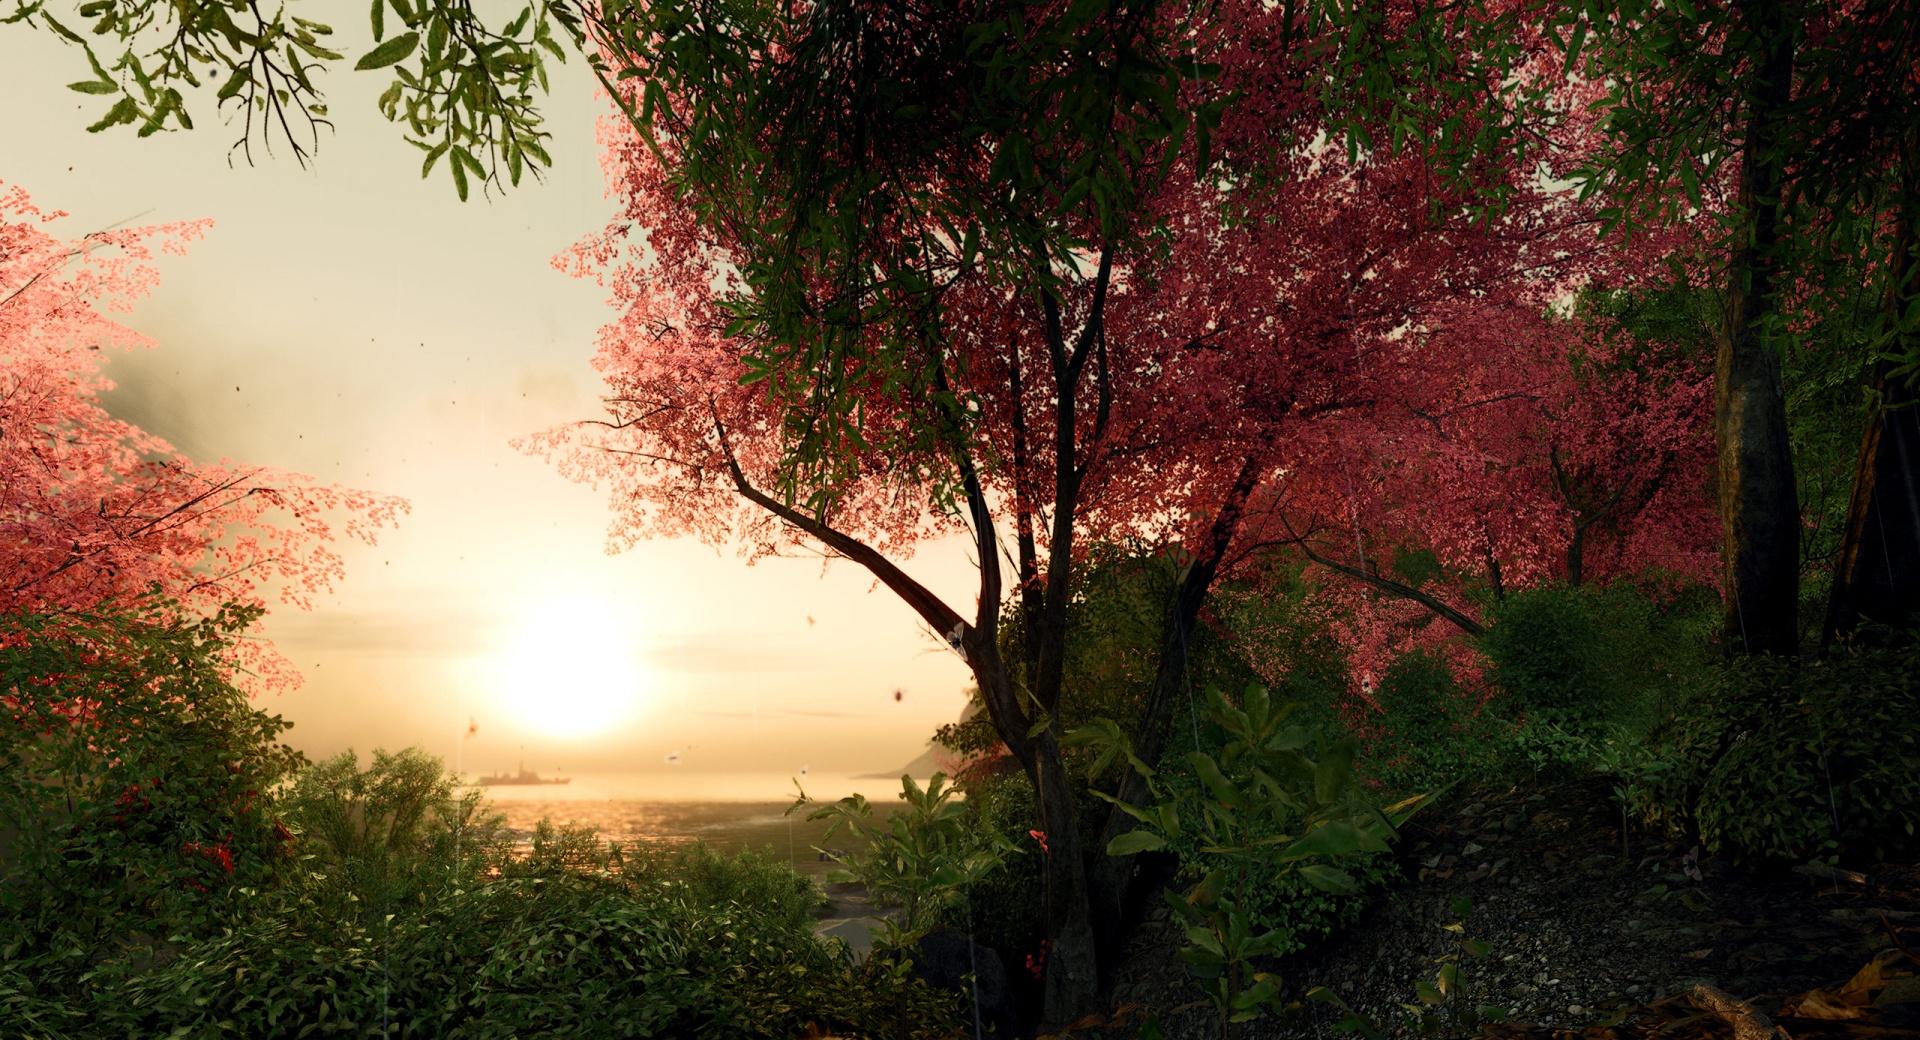 Crysis Video Game Sakura at 1280 x 960 size wallpapers HD quality